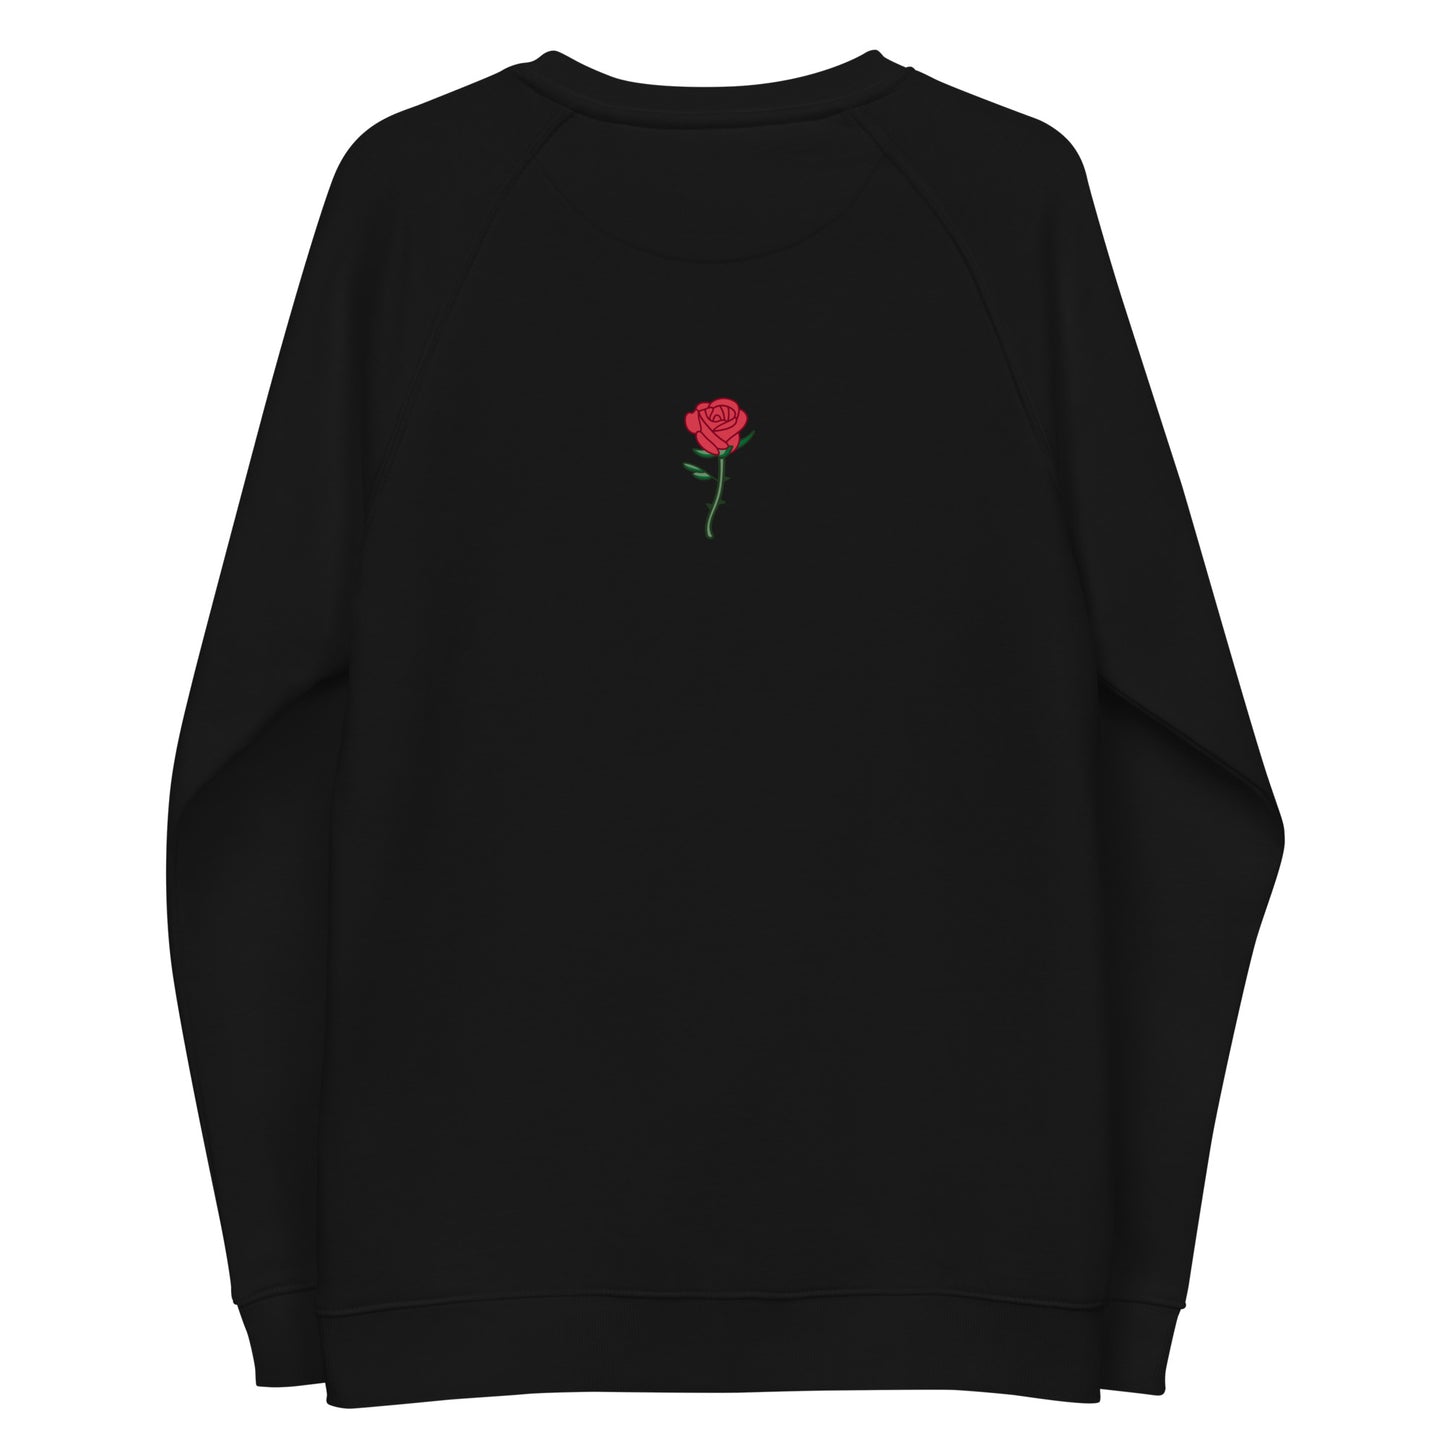 Admire Thread  Self Love sweatshirt